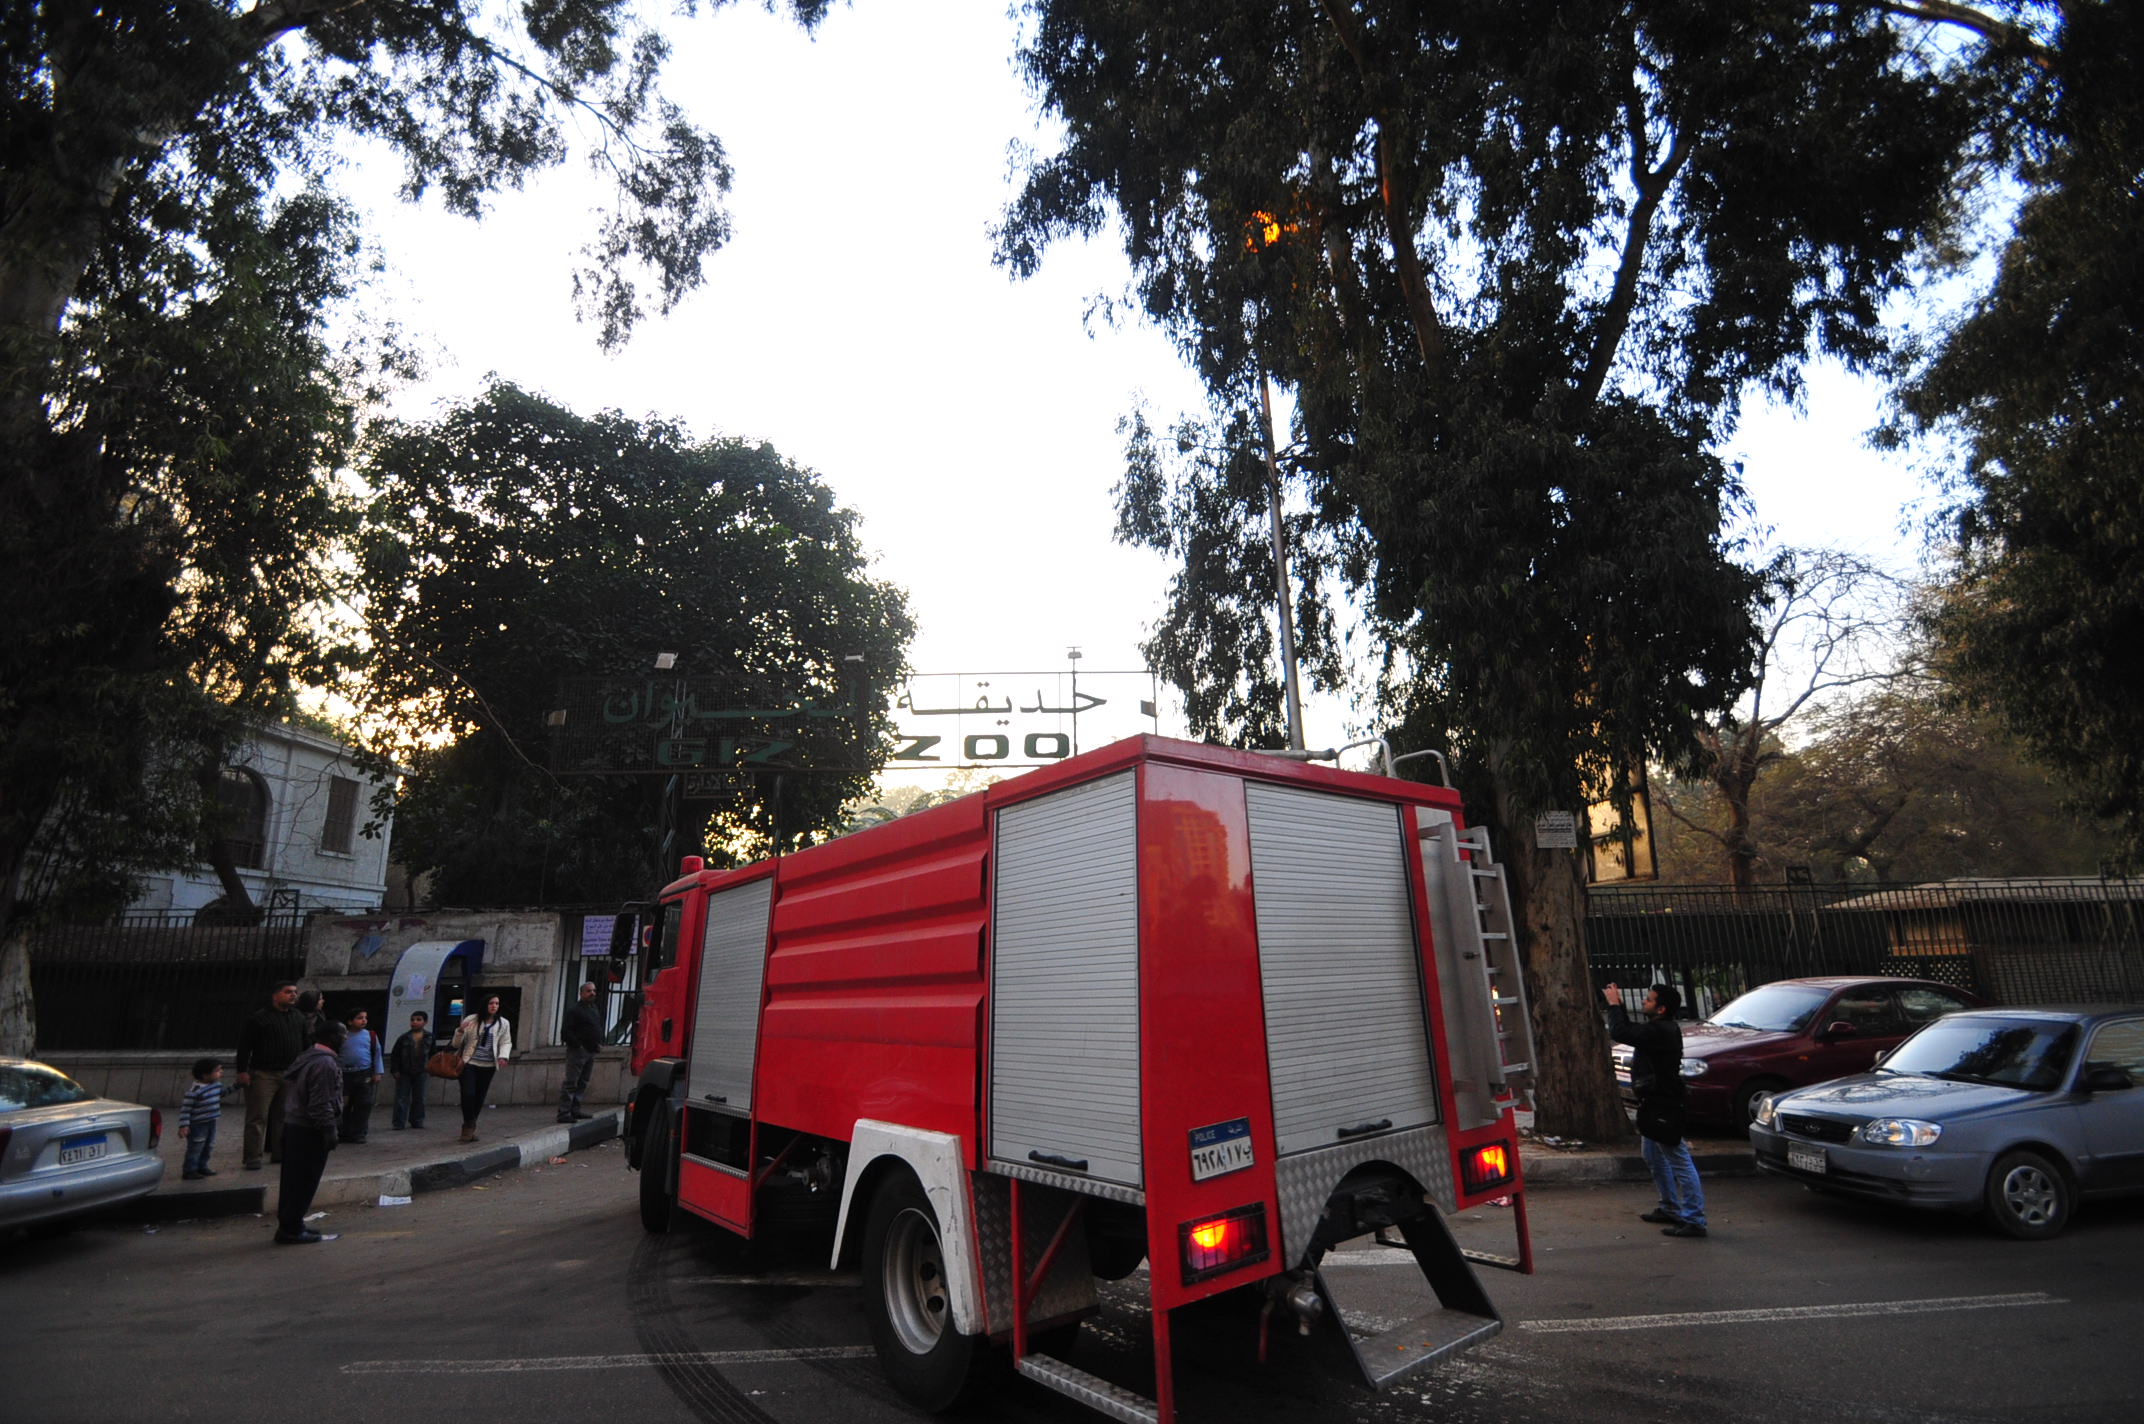 Fire trucks arrive to tackle a blaze at Giza Zoo Hassan Ibrahim